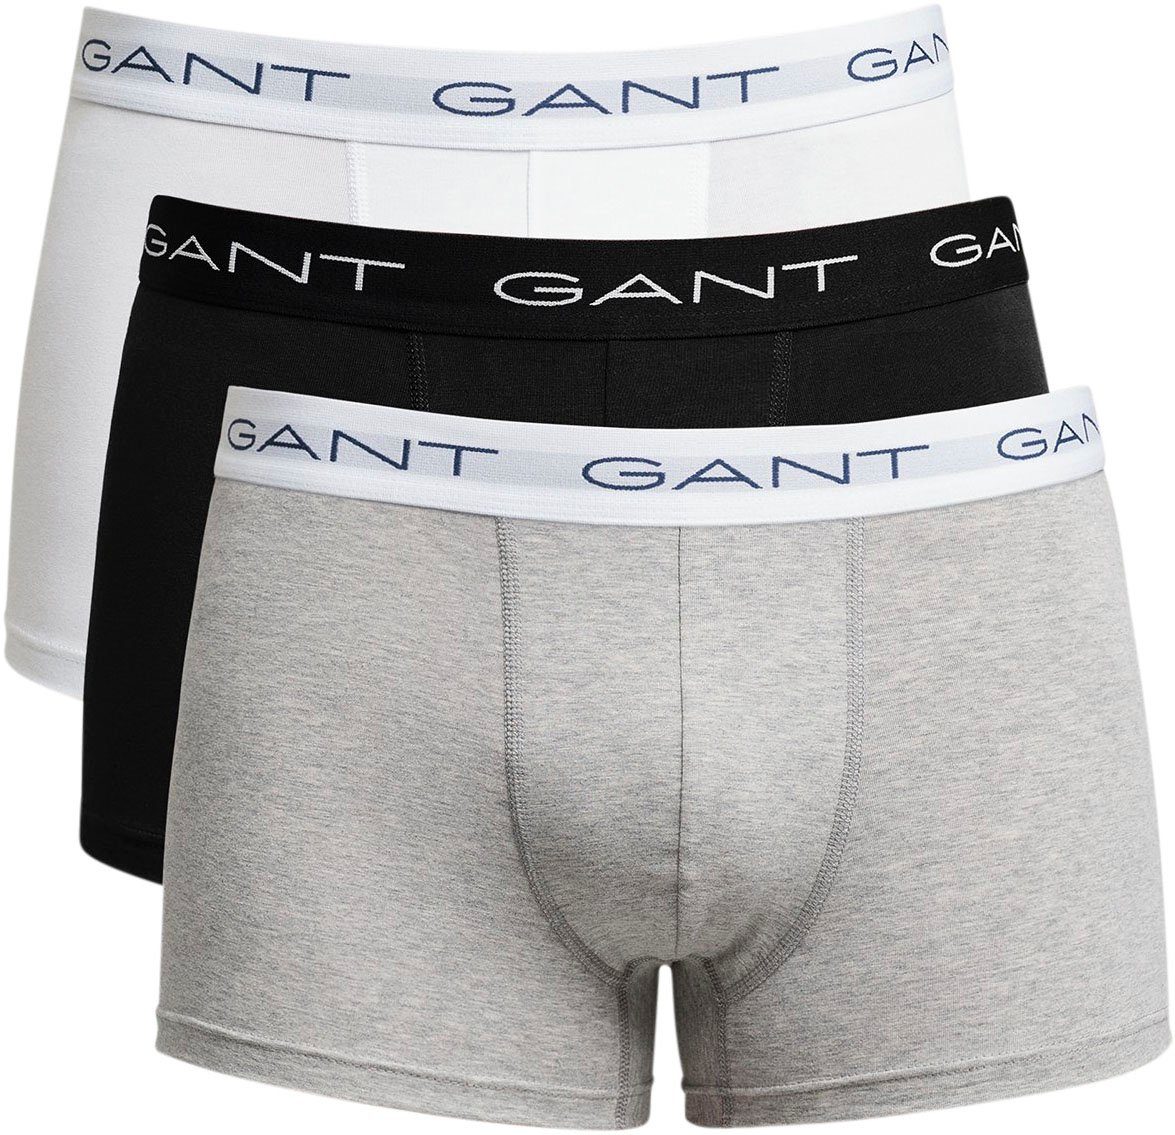 Gant Trunk (3er-Pack) grau, schwarz, weiß